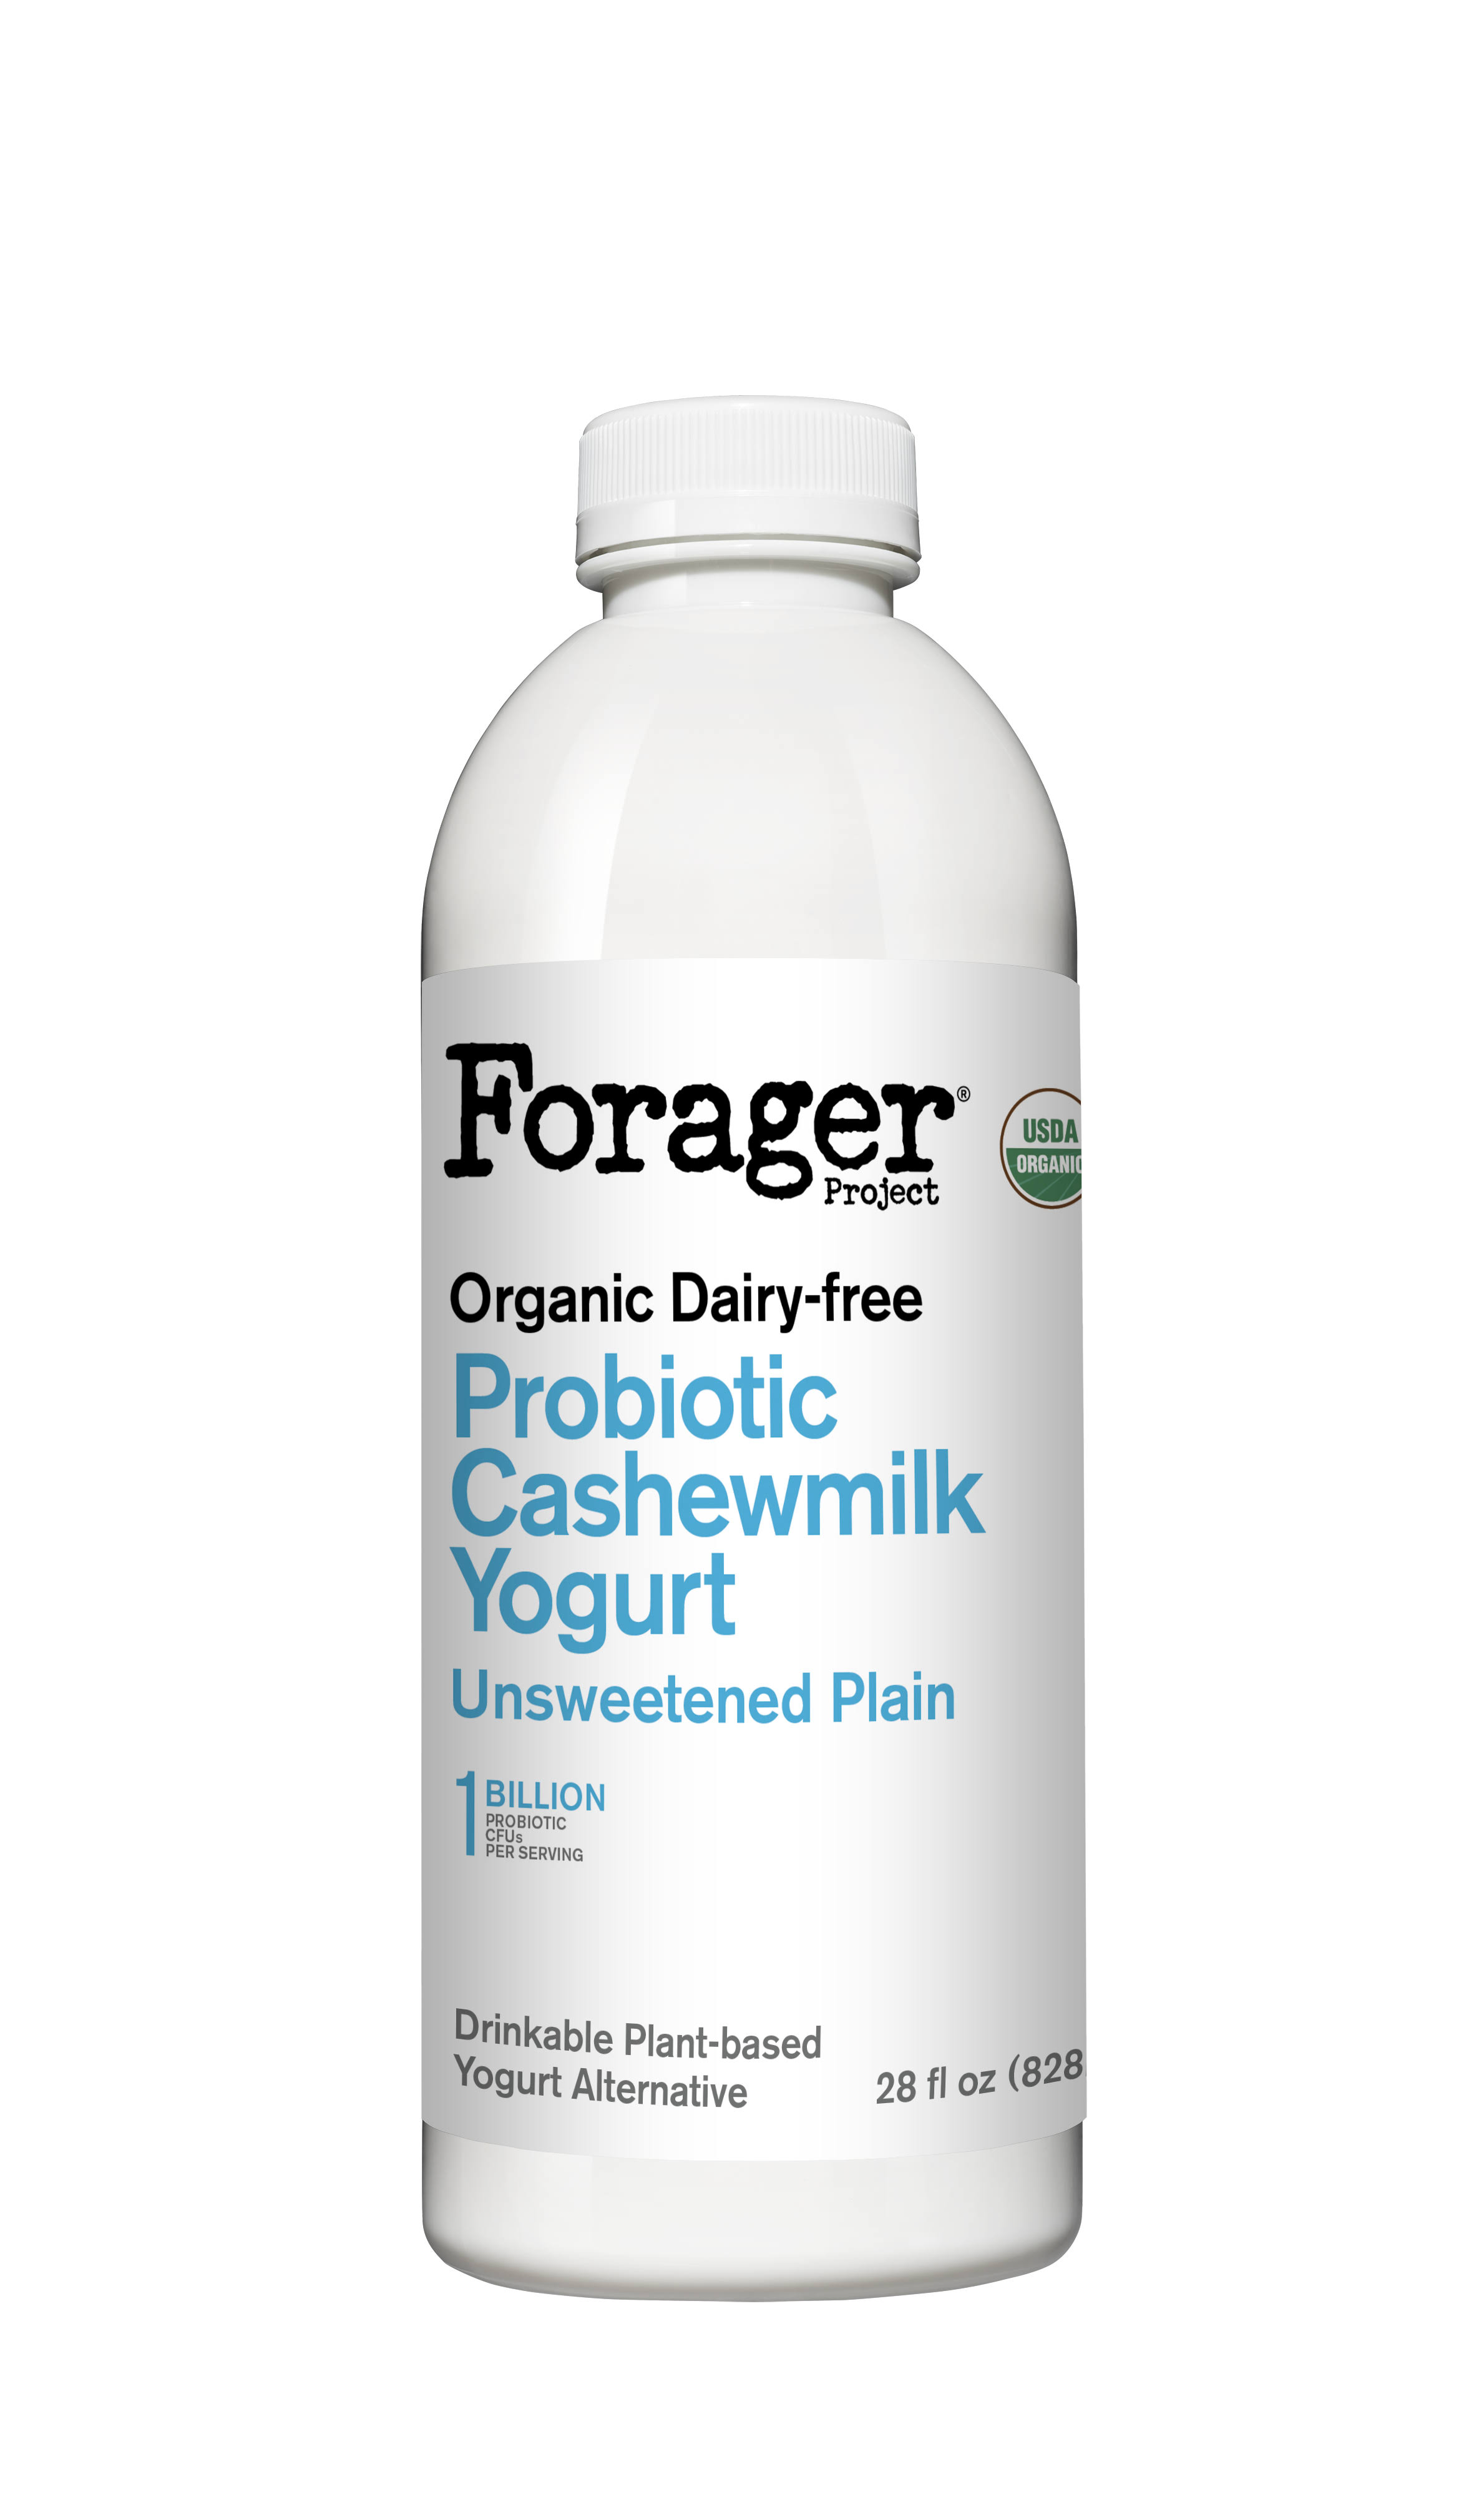 Forager Project Cashewmilk Yogurt, Organic, Dairy-Free, Probiotic, Unsweetened Plain - 28 fl oz